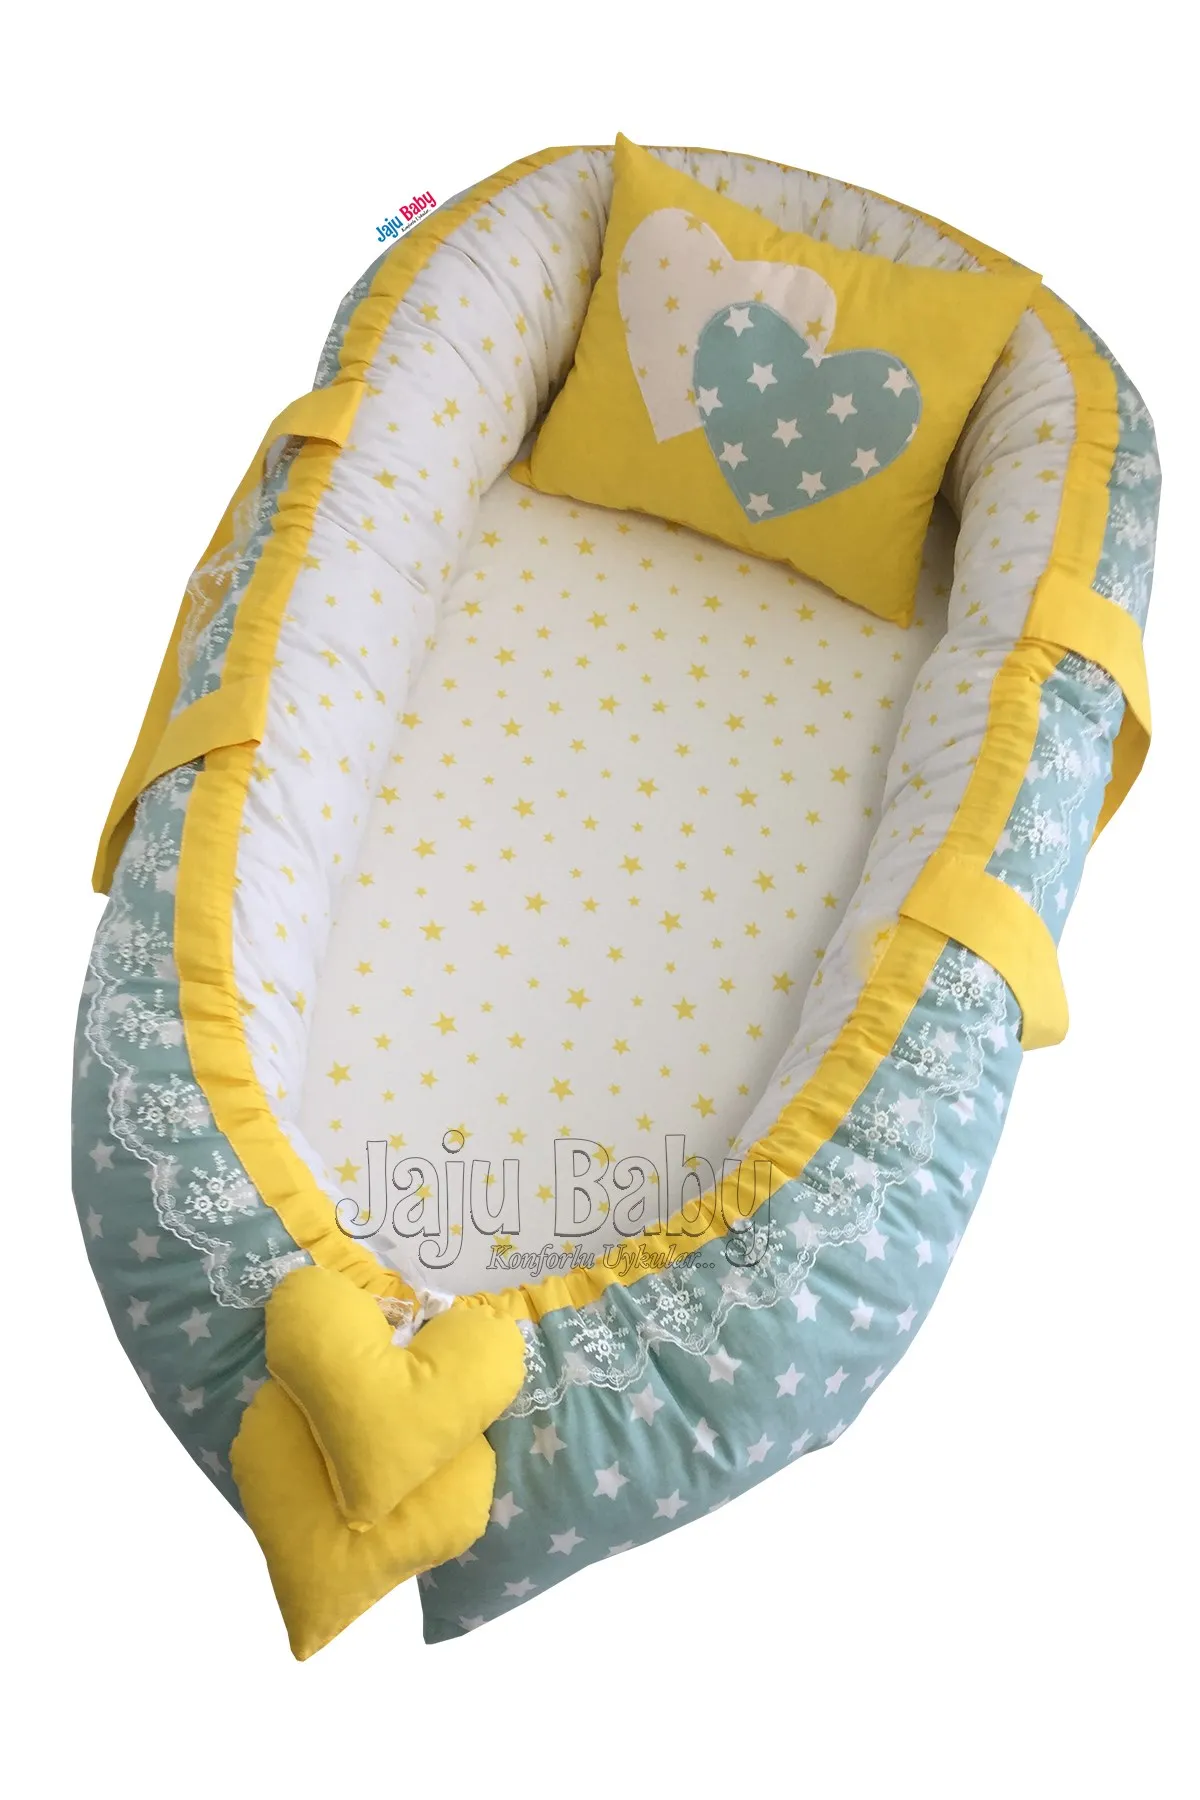 

Jaju Baby Handmade, Green Star Luxury Orthopedic Baby Bed Babynest Special Design 100x60 Portable Crib Travel Bed Newborn